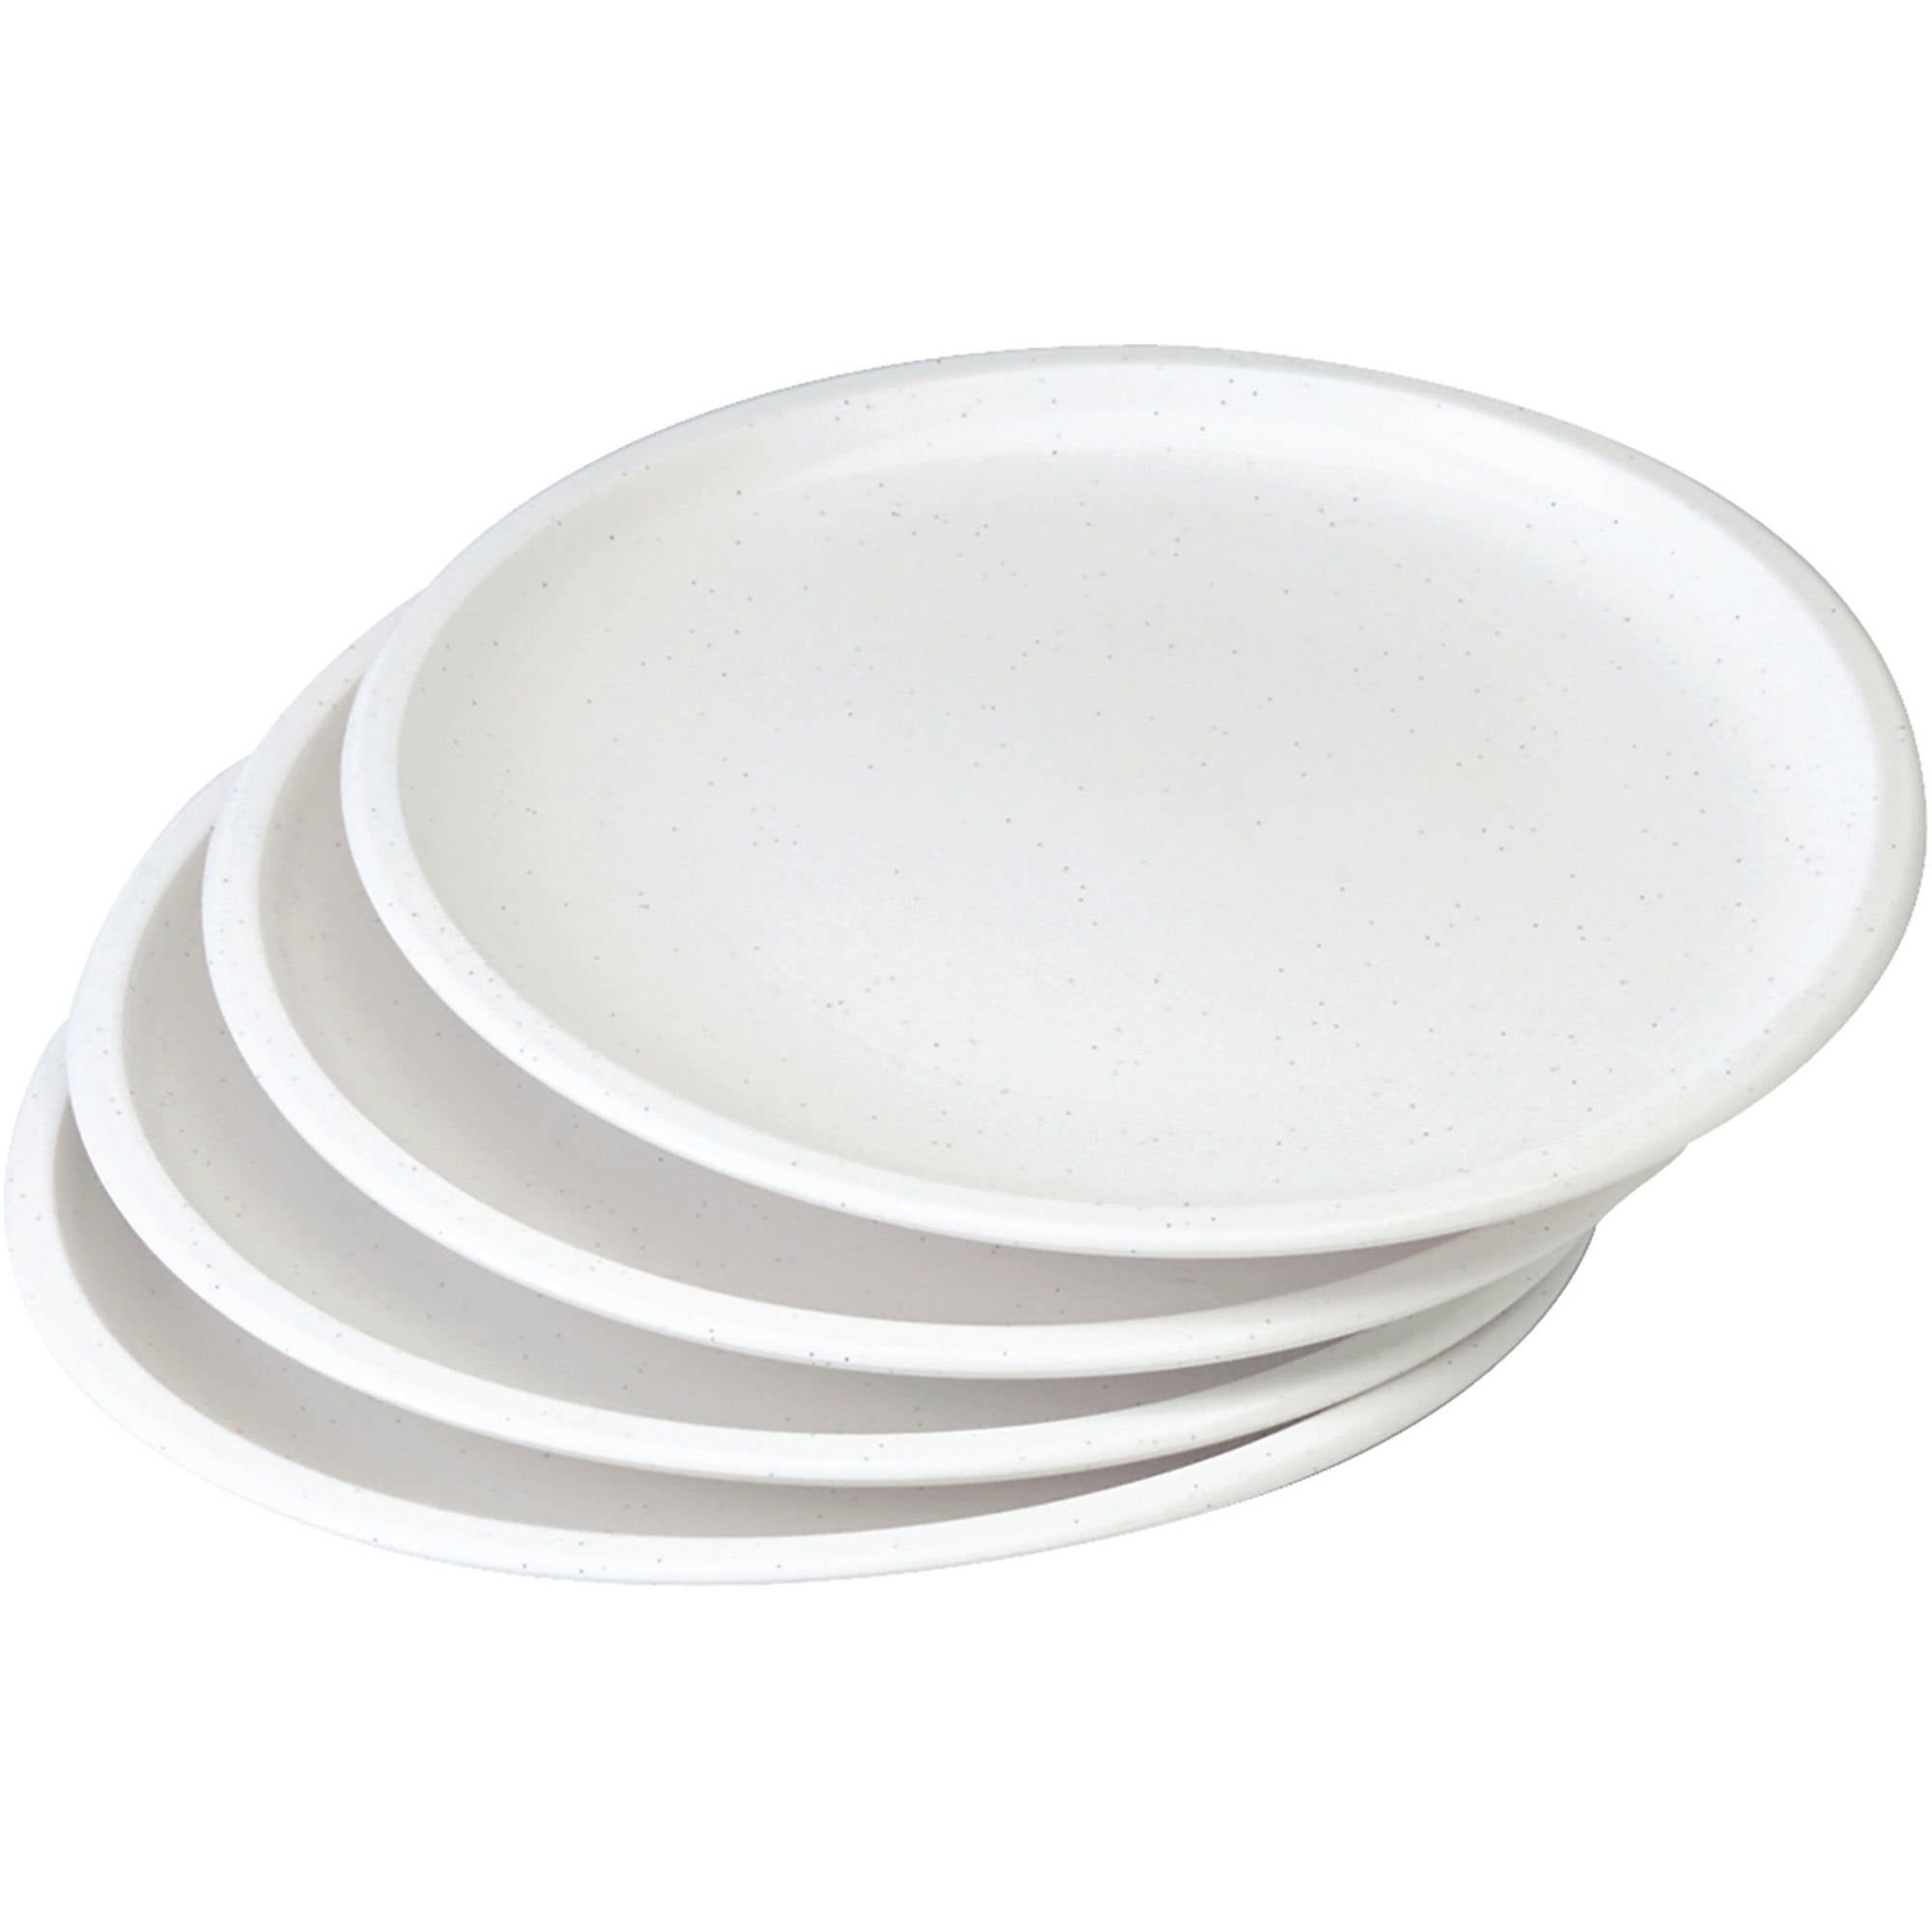 Prep Solutions by Progressive Microwave Plates, Set of 4 - Walmart.com